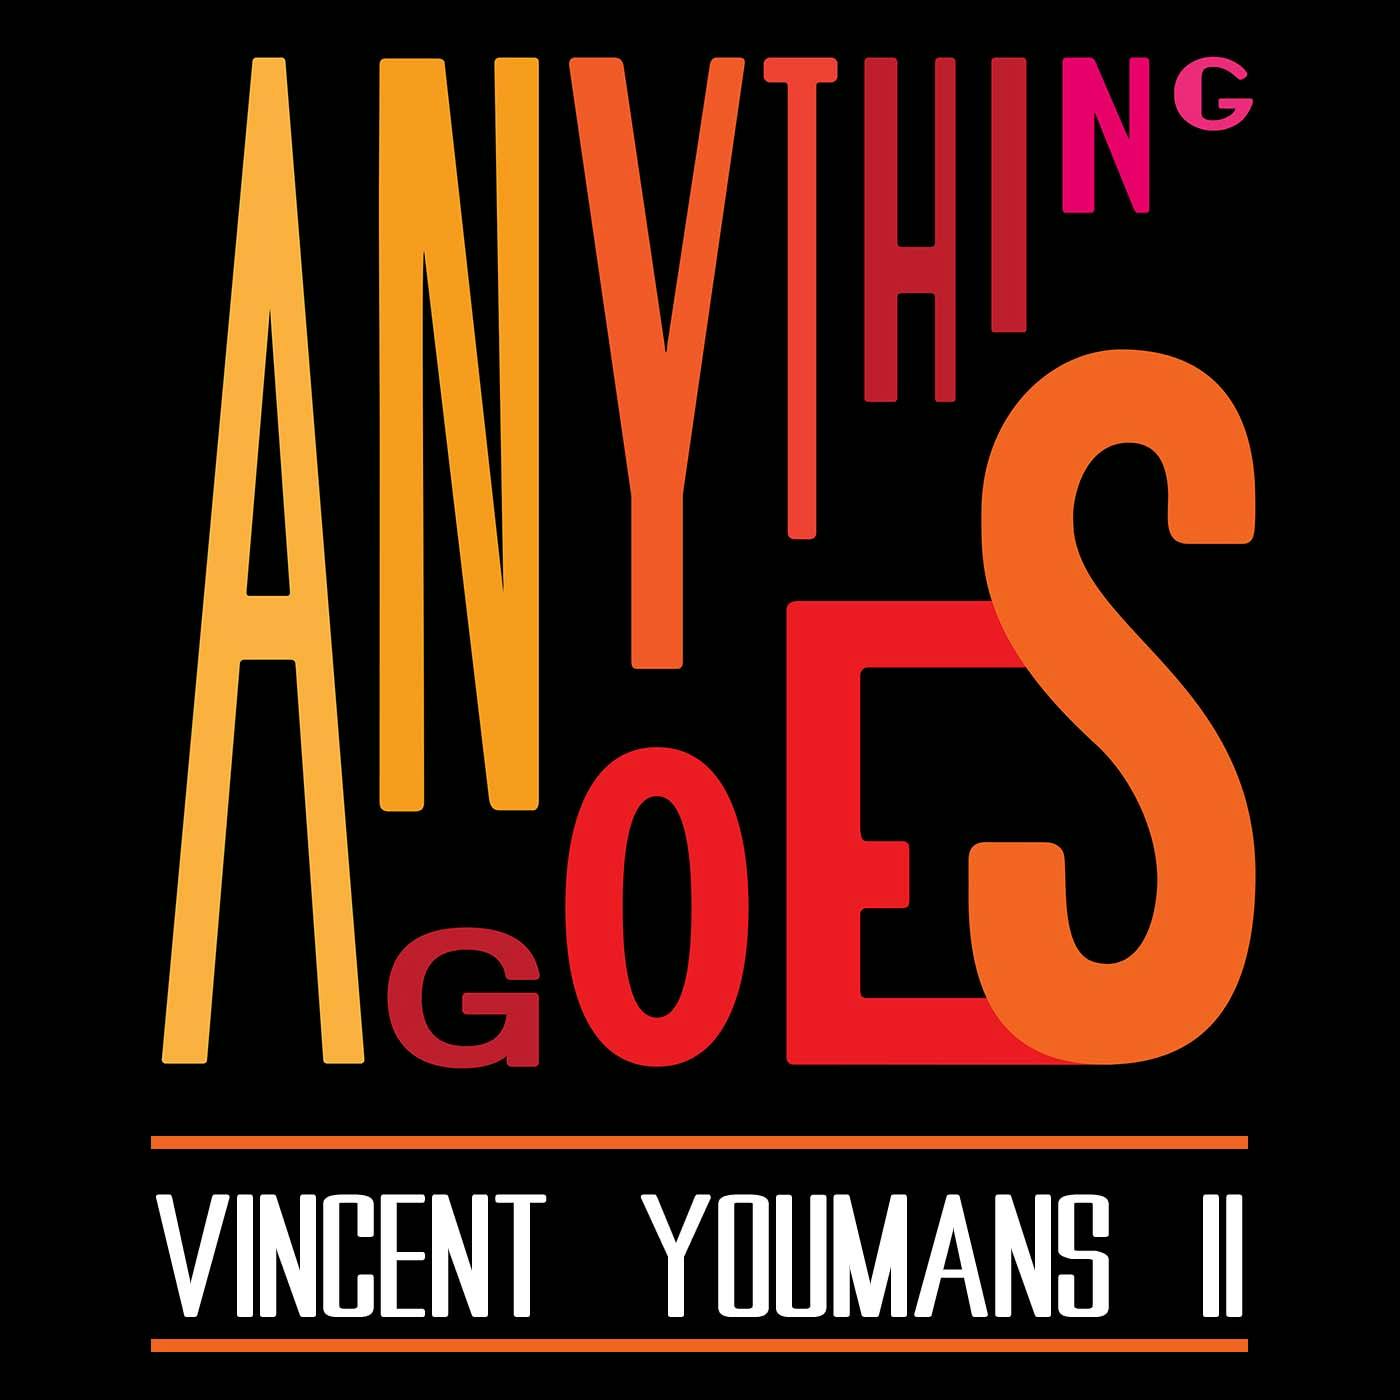 97 Vincent Youmans II